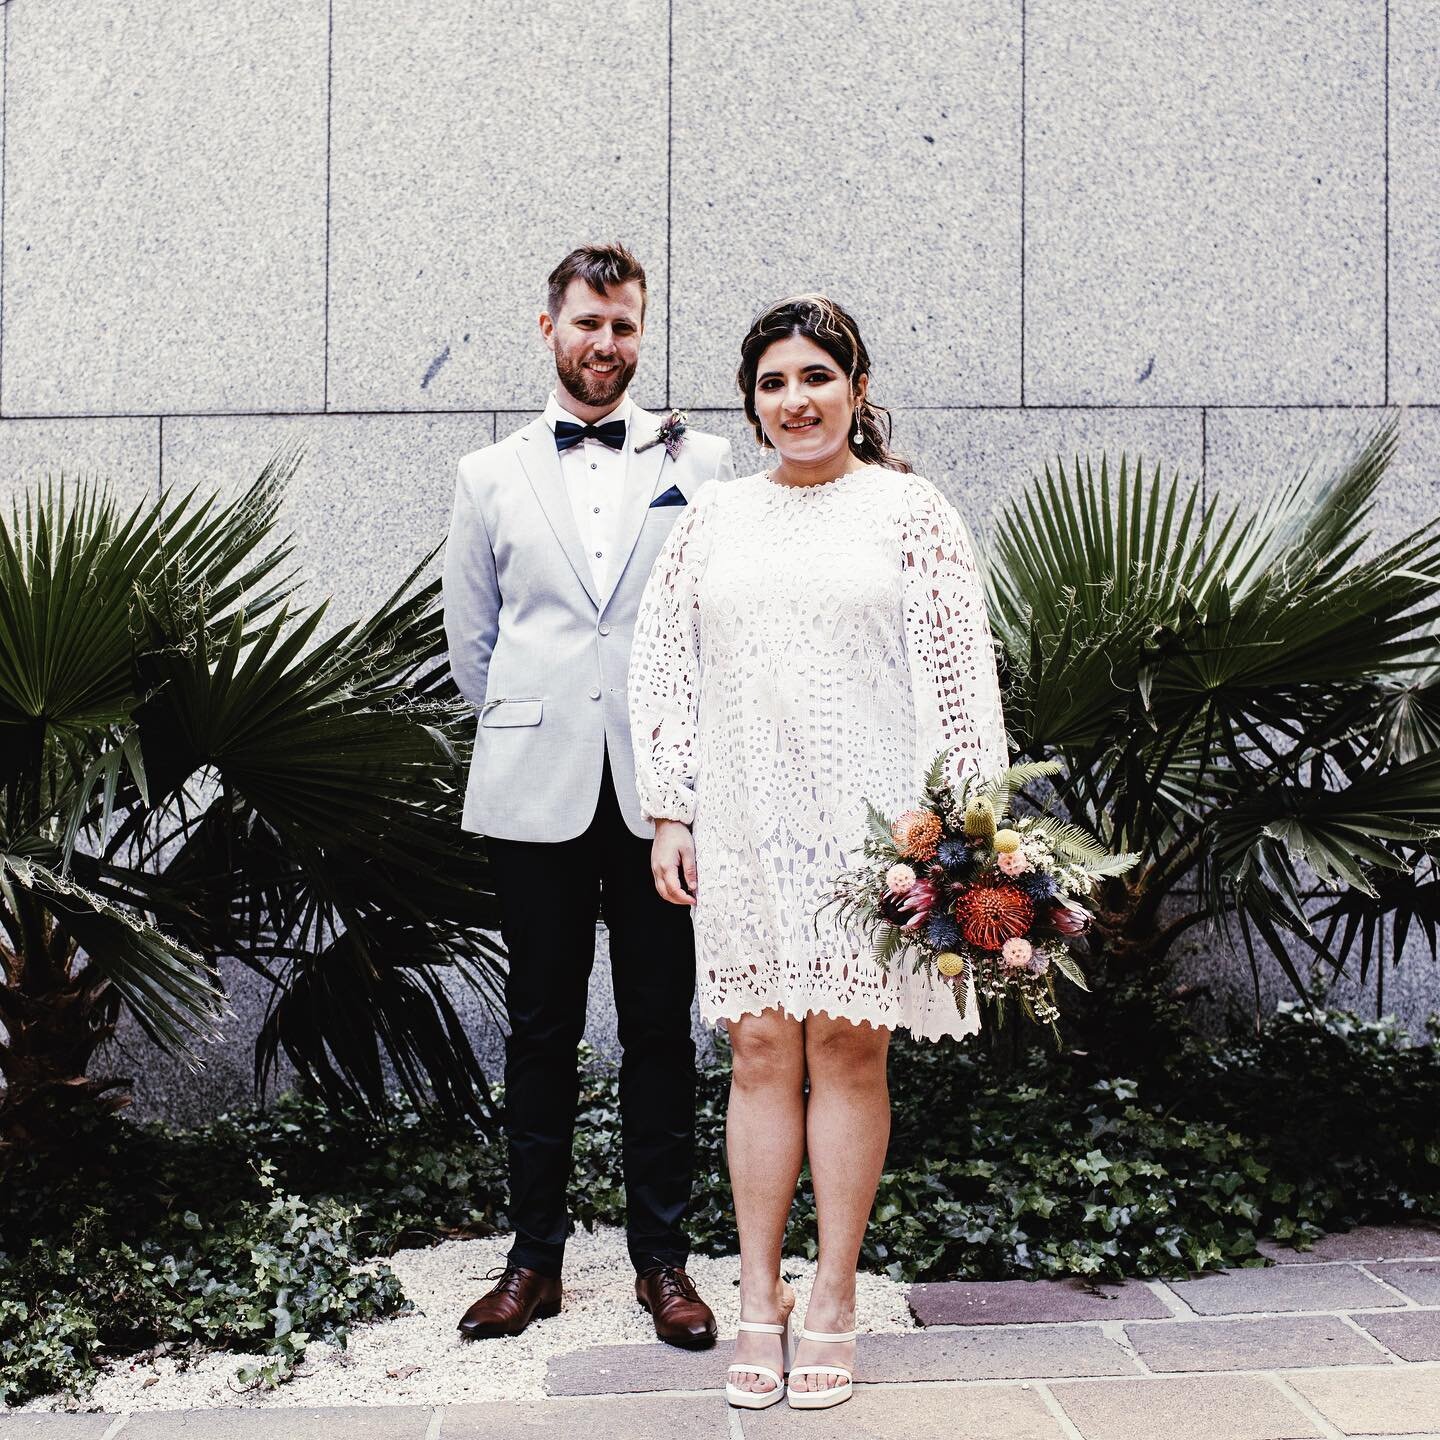 Devika + Mark&rsquo;s Melbourne CBD elopement.

.
.
.
.

#macedonrangesweddingphotographer
#warrnamboolweddingphotographer
#australianelopement
#elopementphotography
#australianweddingphotographer
#australianwedding
#weddingchicks
#melbournephotograp